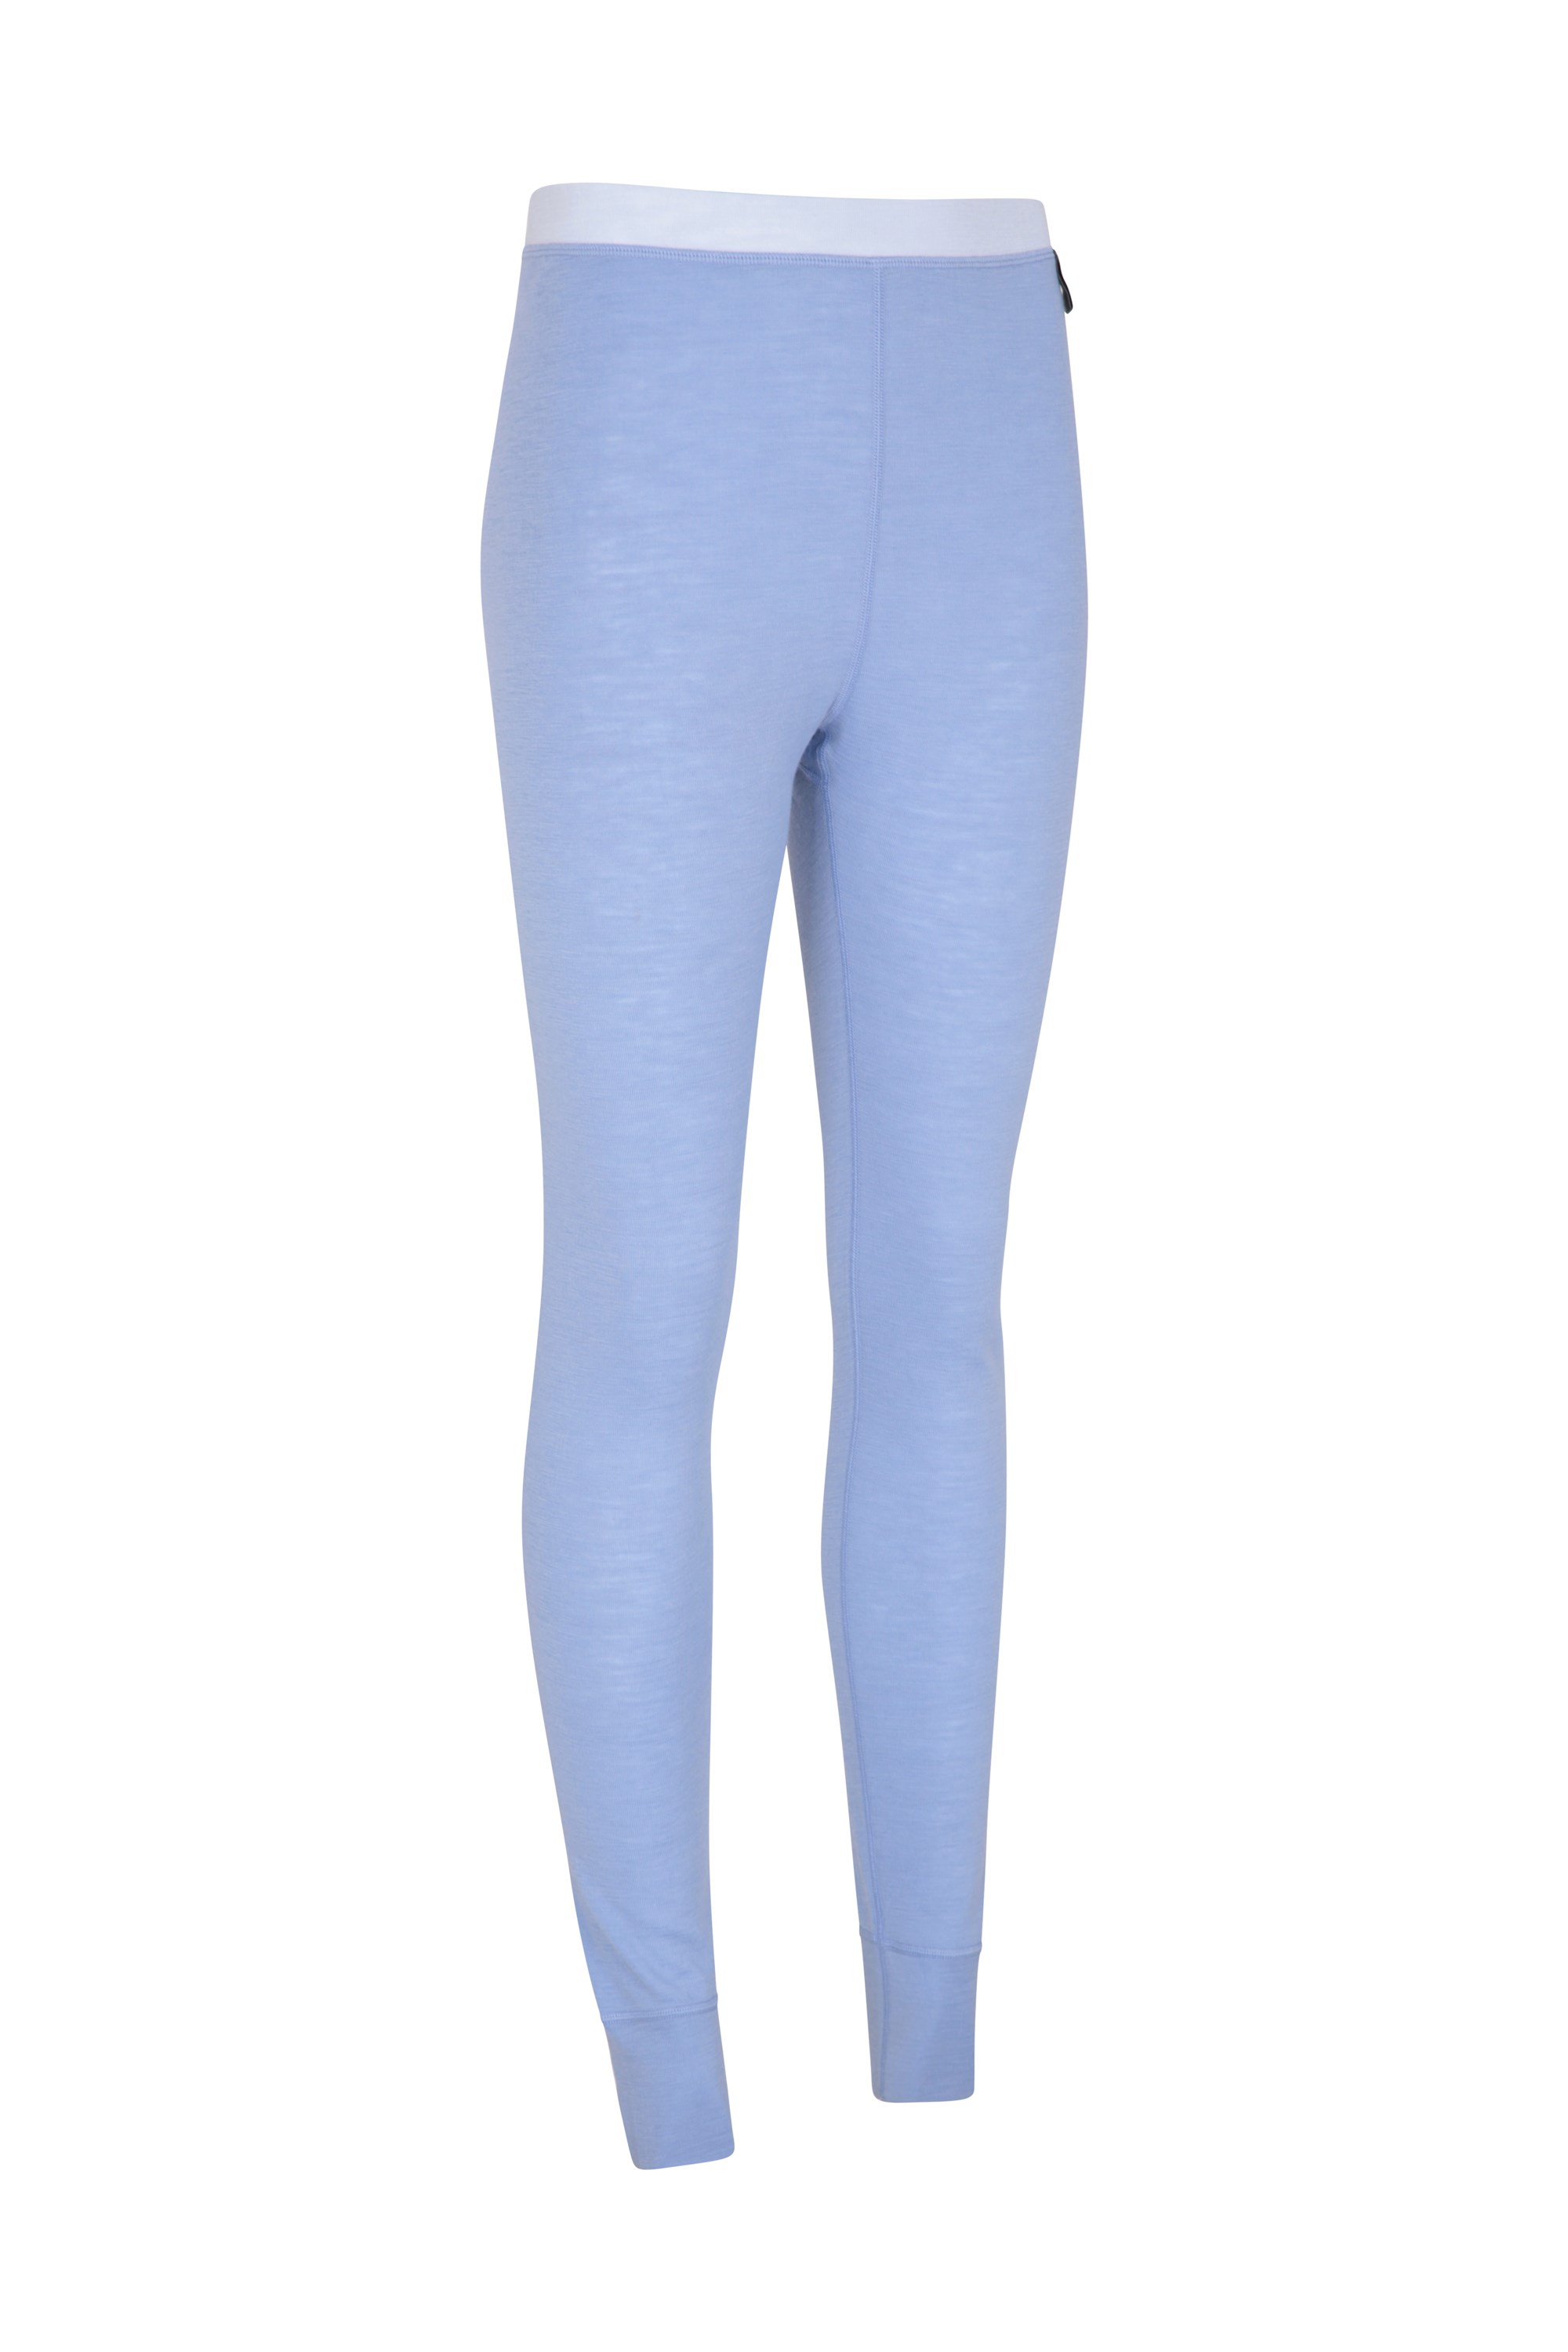 Size : 3XL Ski Thermal Pants Long Warm Underwear CYGGA Womens Thermal Leggings Lined with Inner Fleece